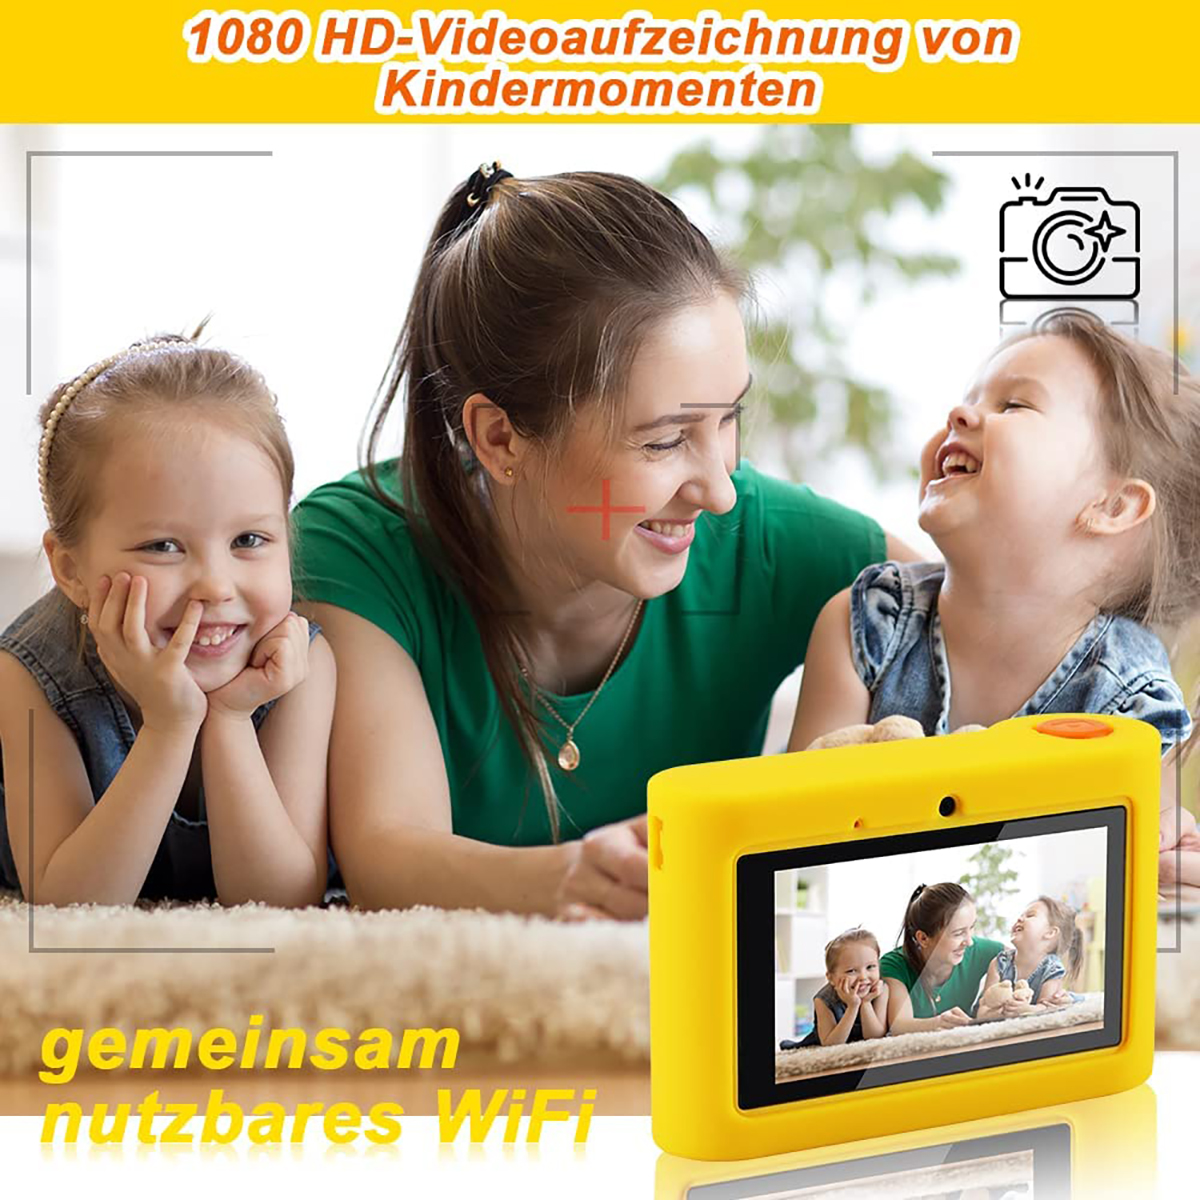 Kinderkamera PRO SD-Karte LIFE DigitalKamera Gelb- Kinderkamera,48MP,1080P,WiFi Fotokamera,32GB FINE